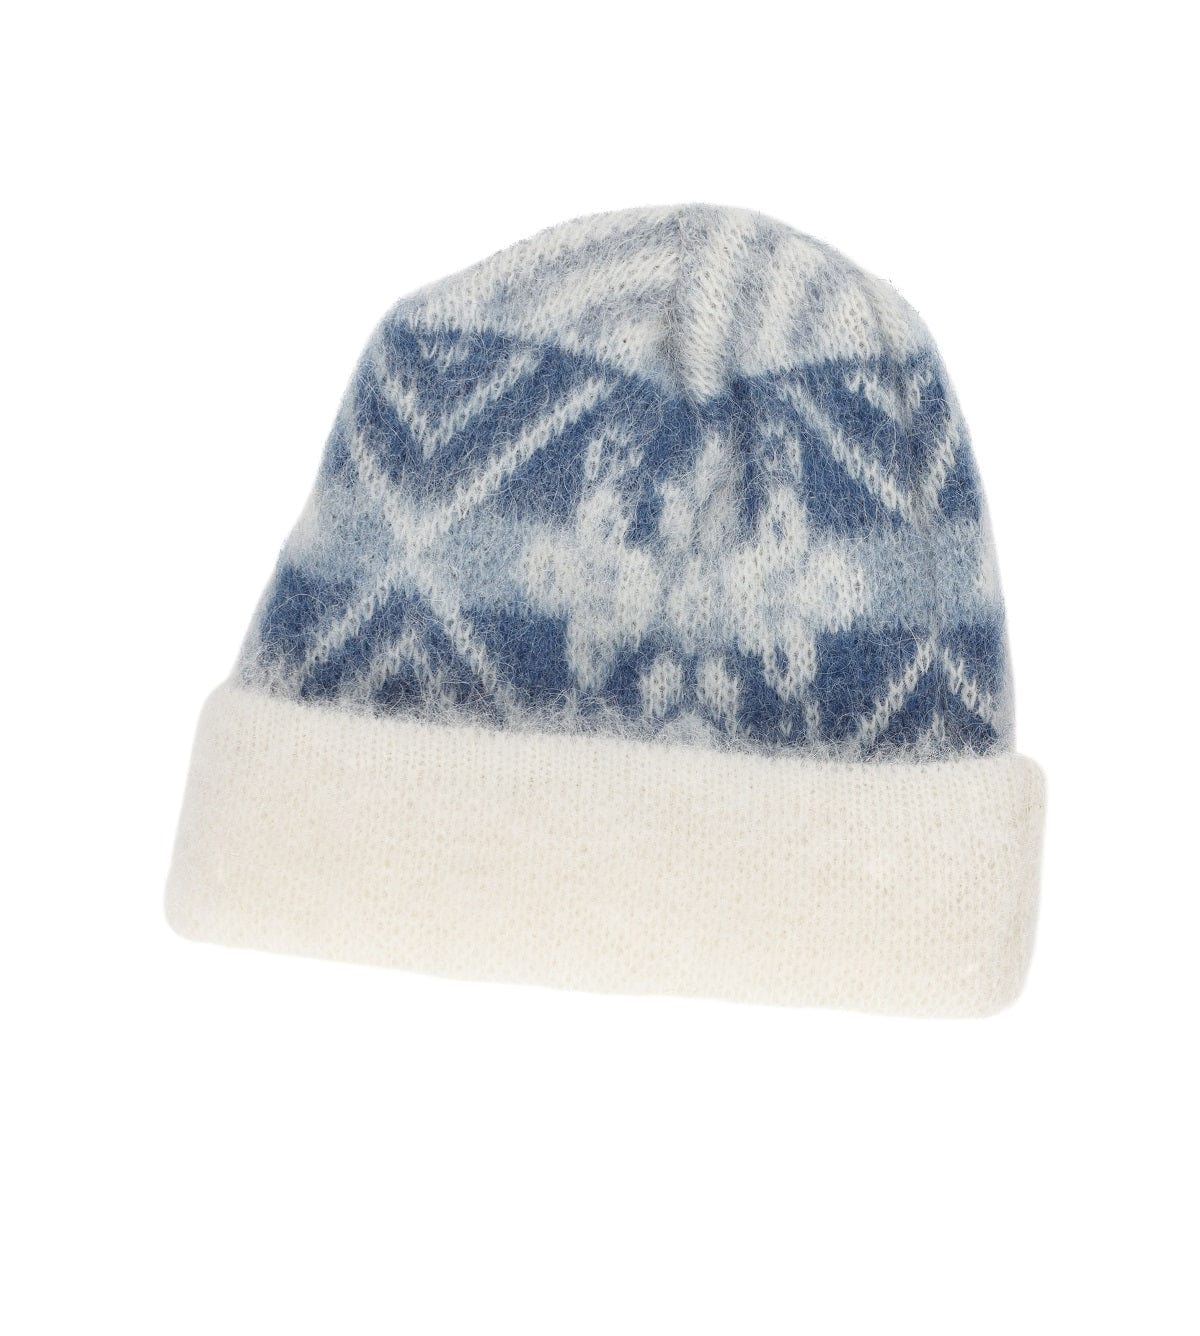 Brushed Wool Hat - 8-petalled rose pattern White / Blue - The Icelandic Store